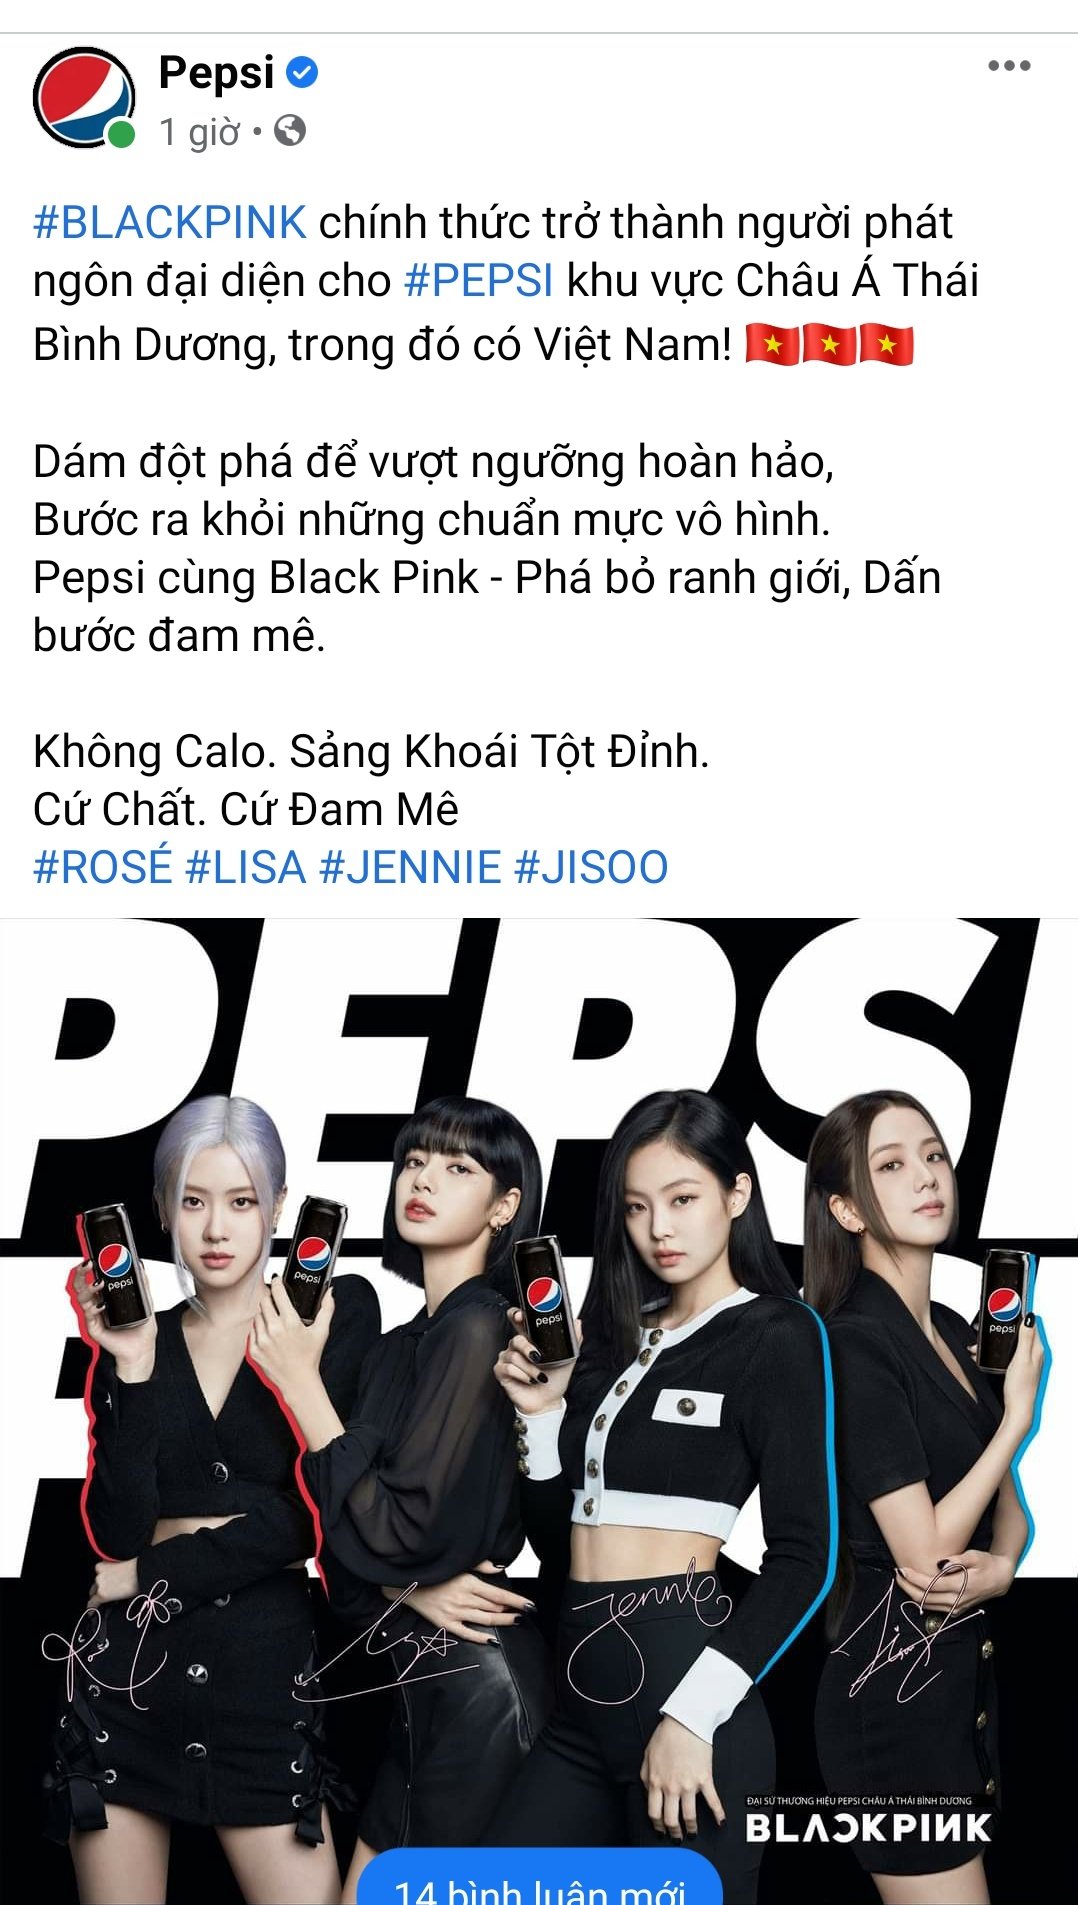 PEPSI TRUNG QUỐC LẠI TUNG THÊM HÌNH  BlackPink Vietnam FC  Facebook